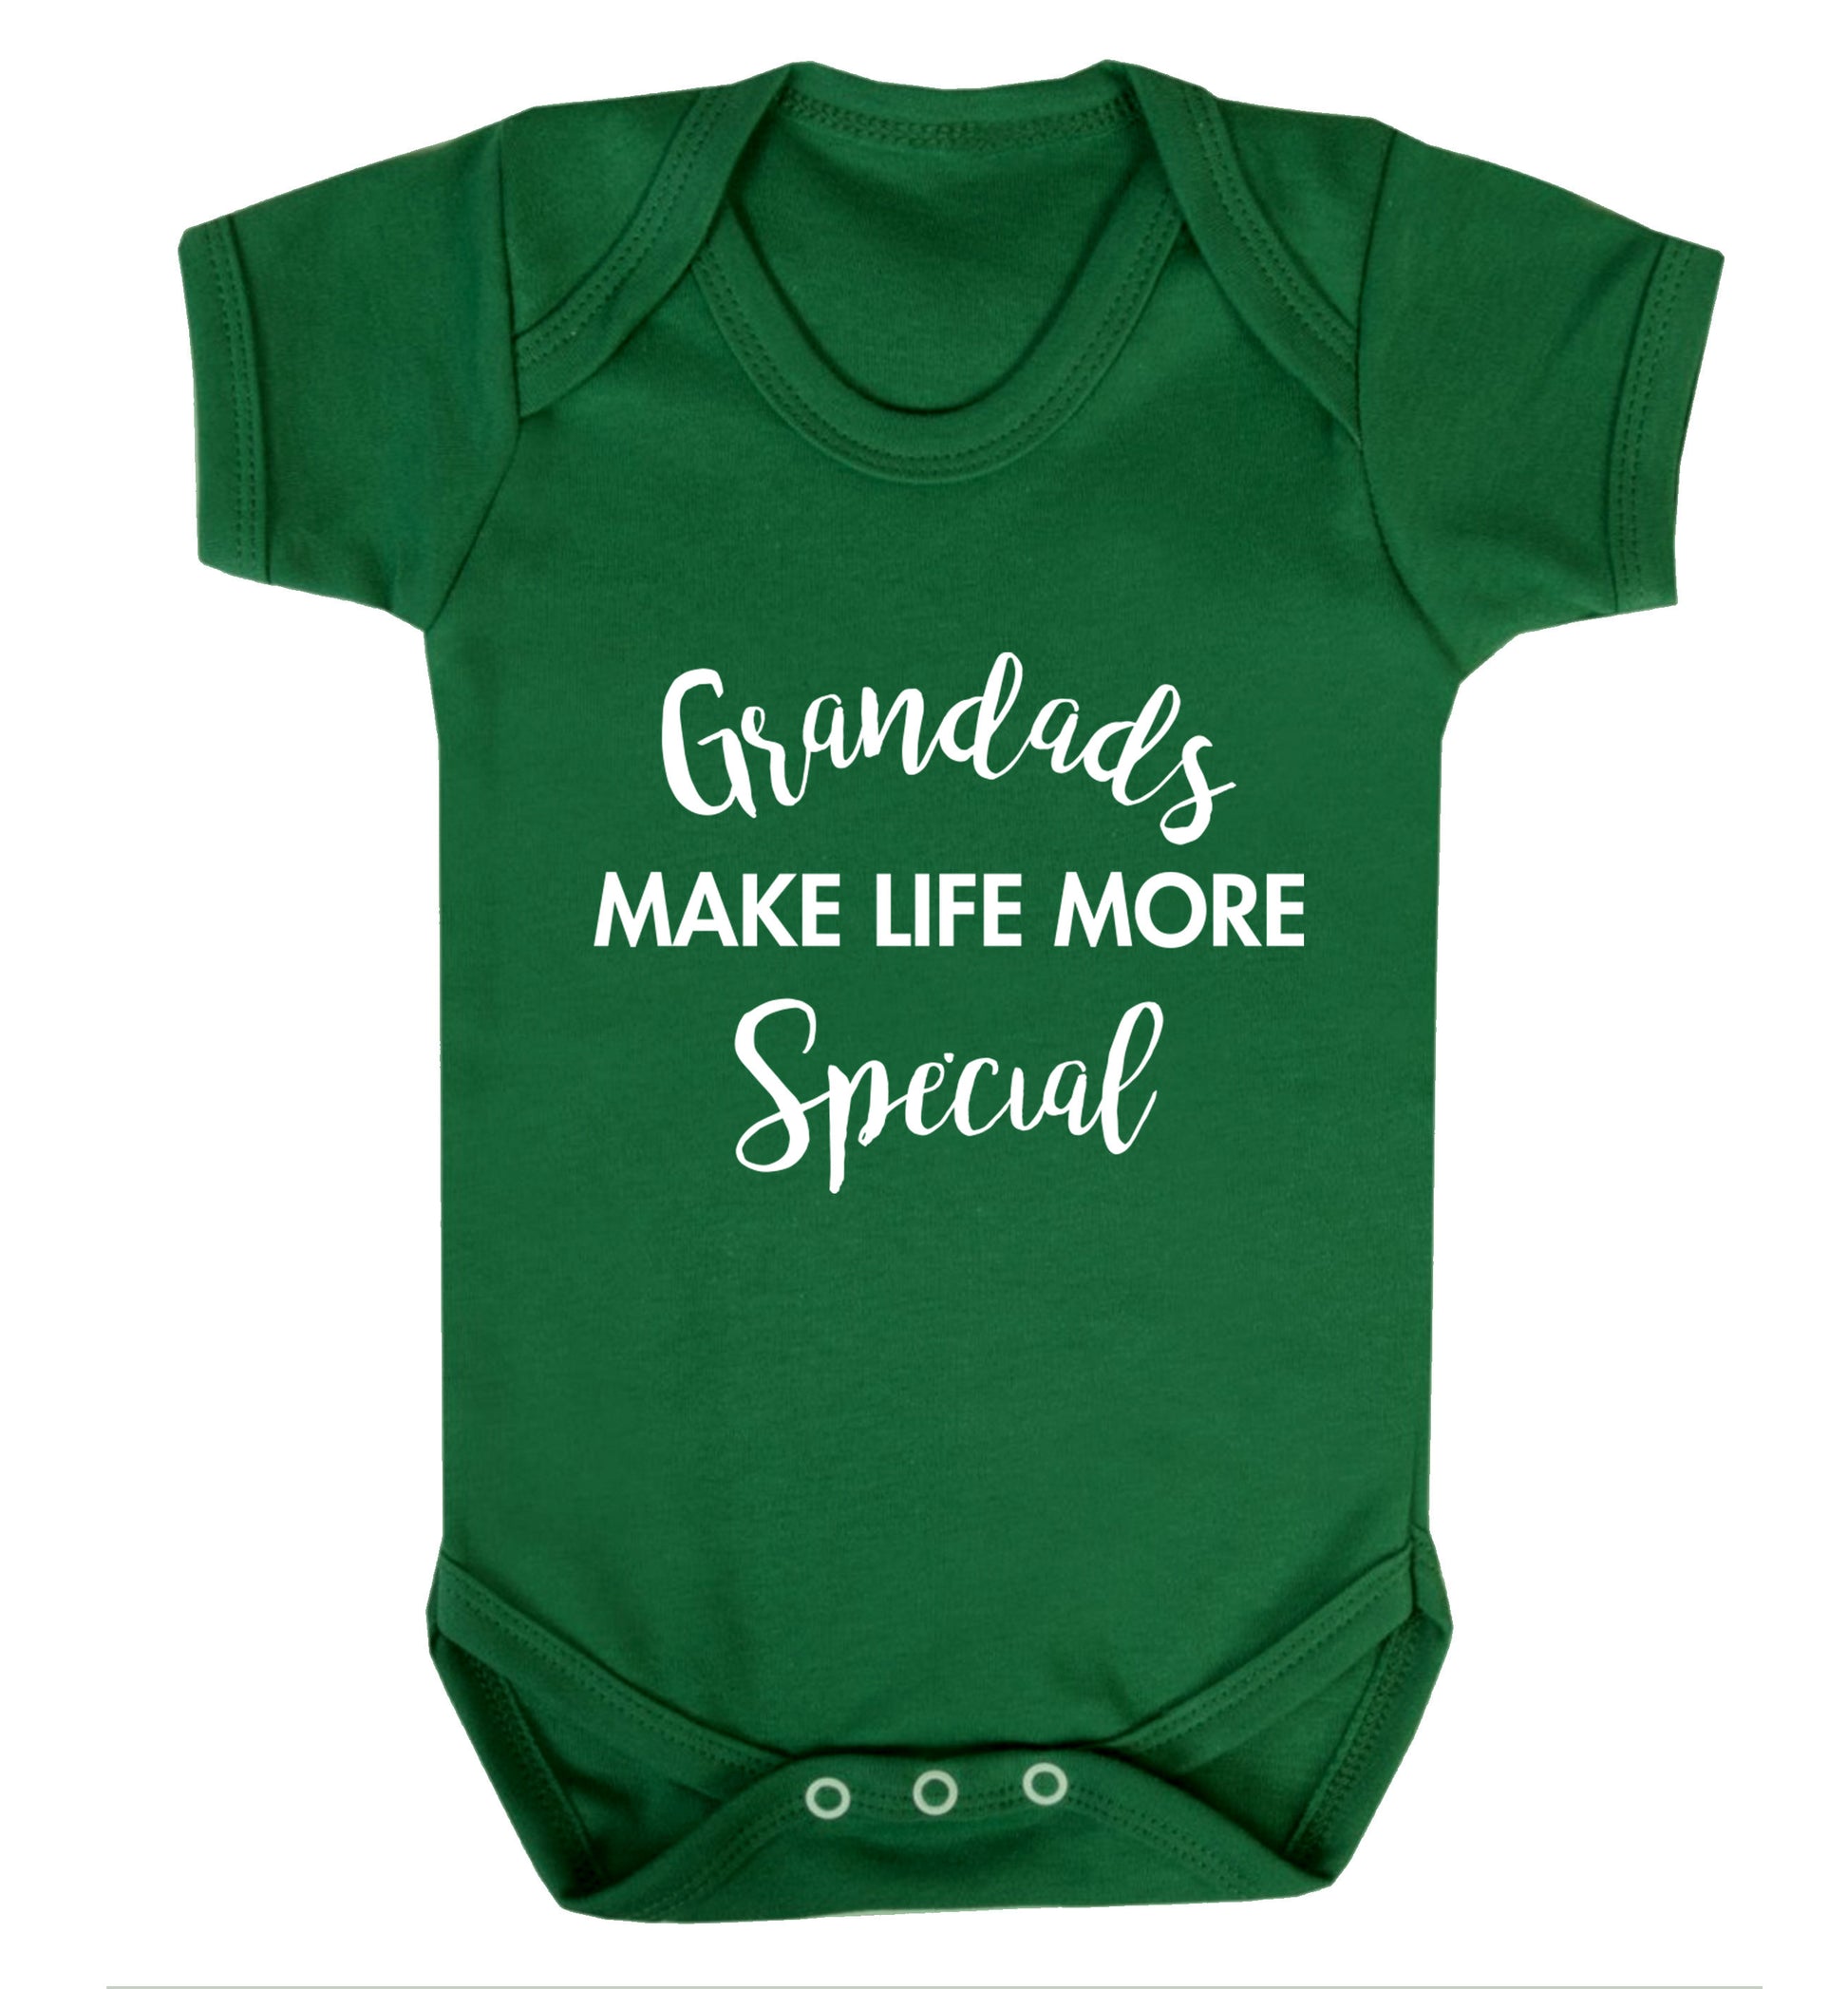 Grandads make life more special Baby Vest green 18-24 months